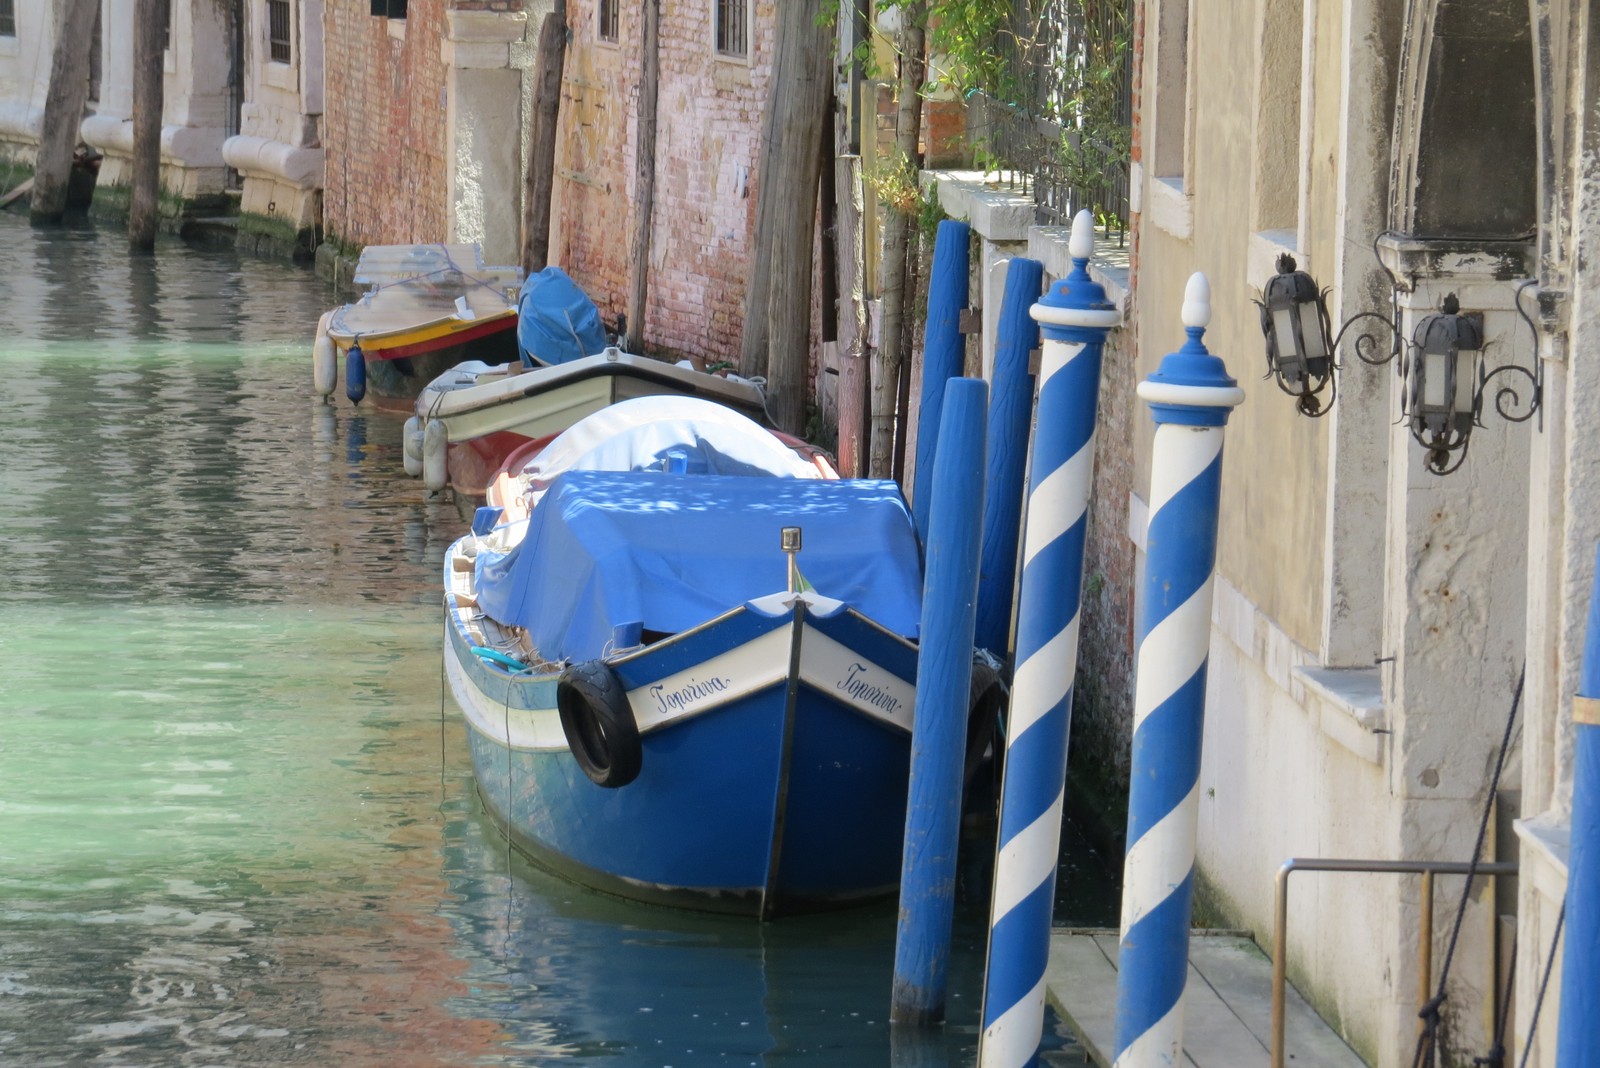 A Venice scene, taken in 2013